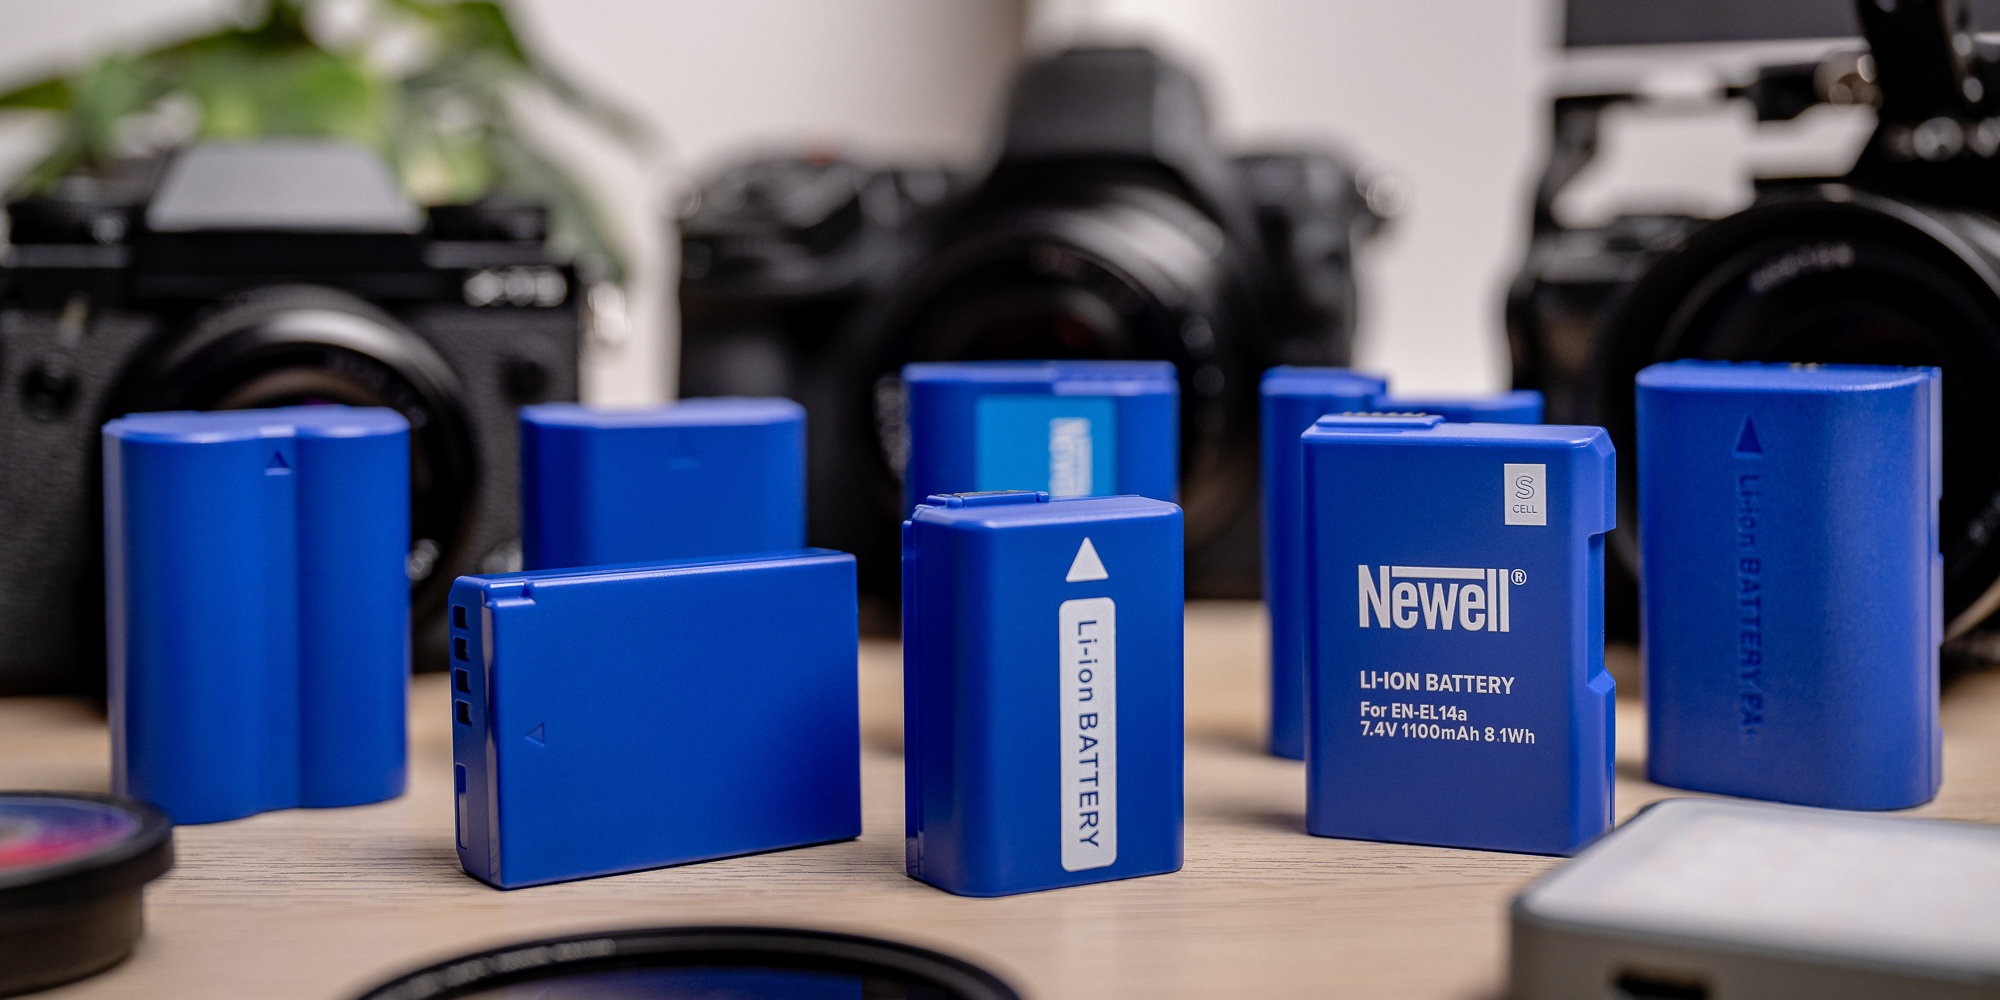 Akumulator Newell SupraCell Protect zamiennik NP-F970 do Sony